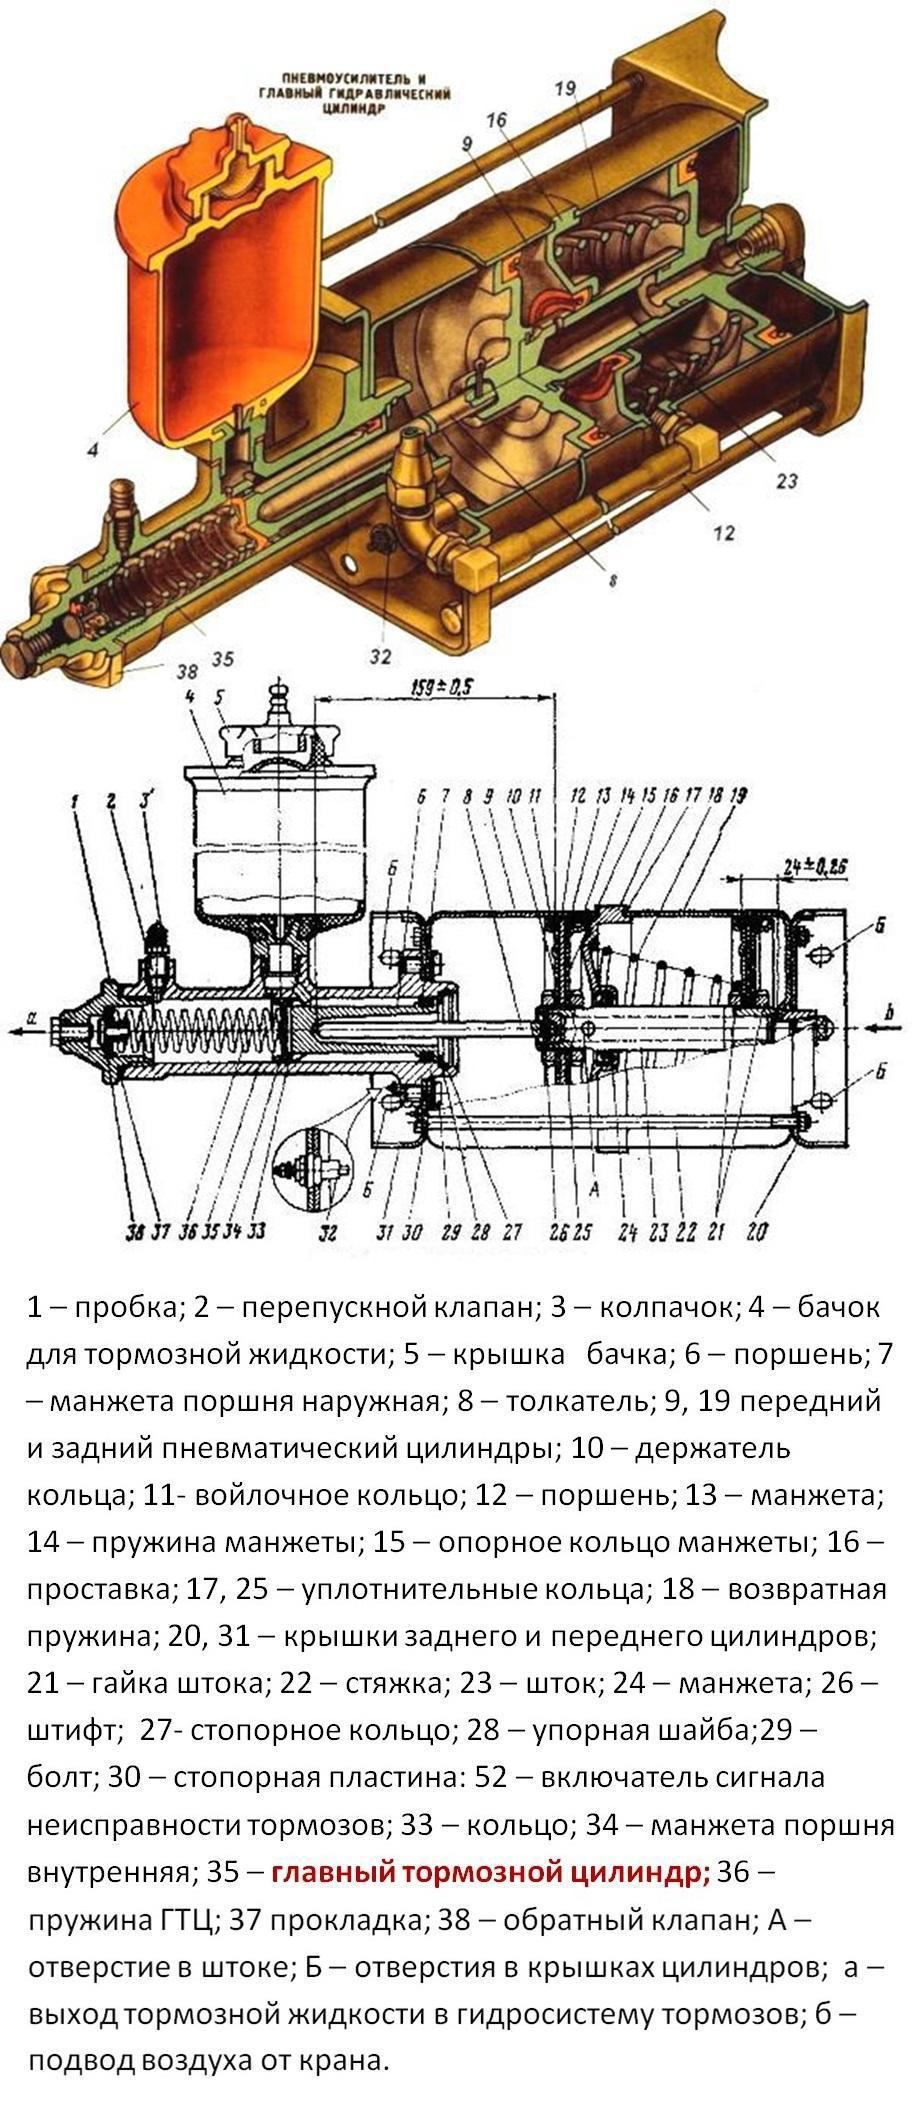 Механизм торможения УРАЛ-4320